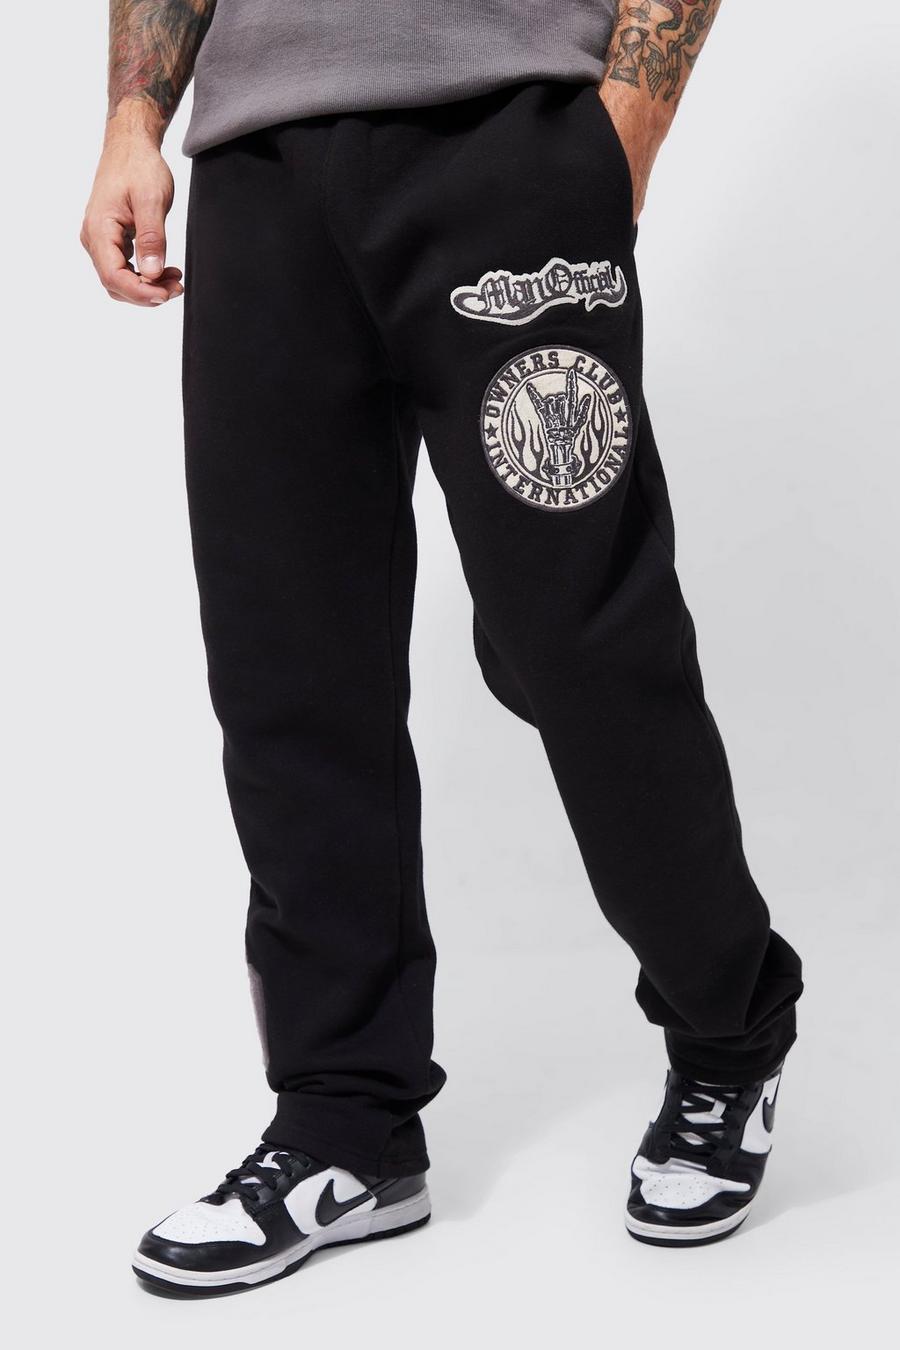 Pantaloni tuta Man Official stile Varsity con stemmi, Black